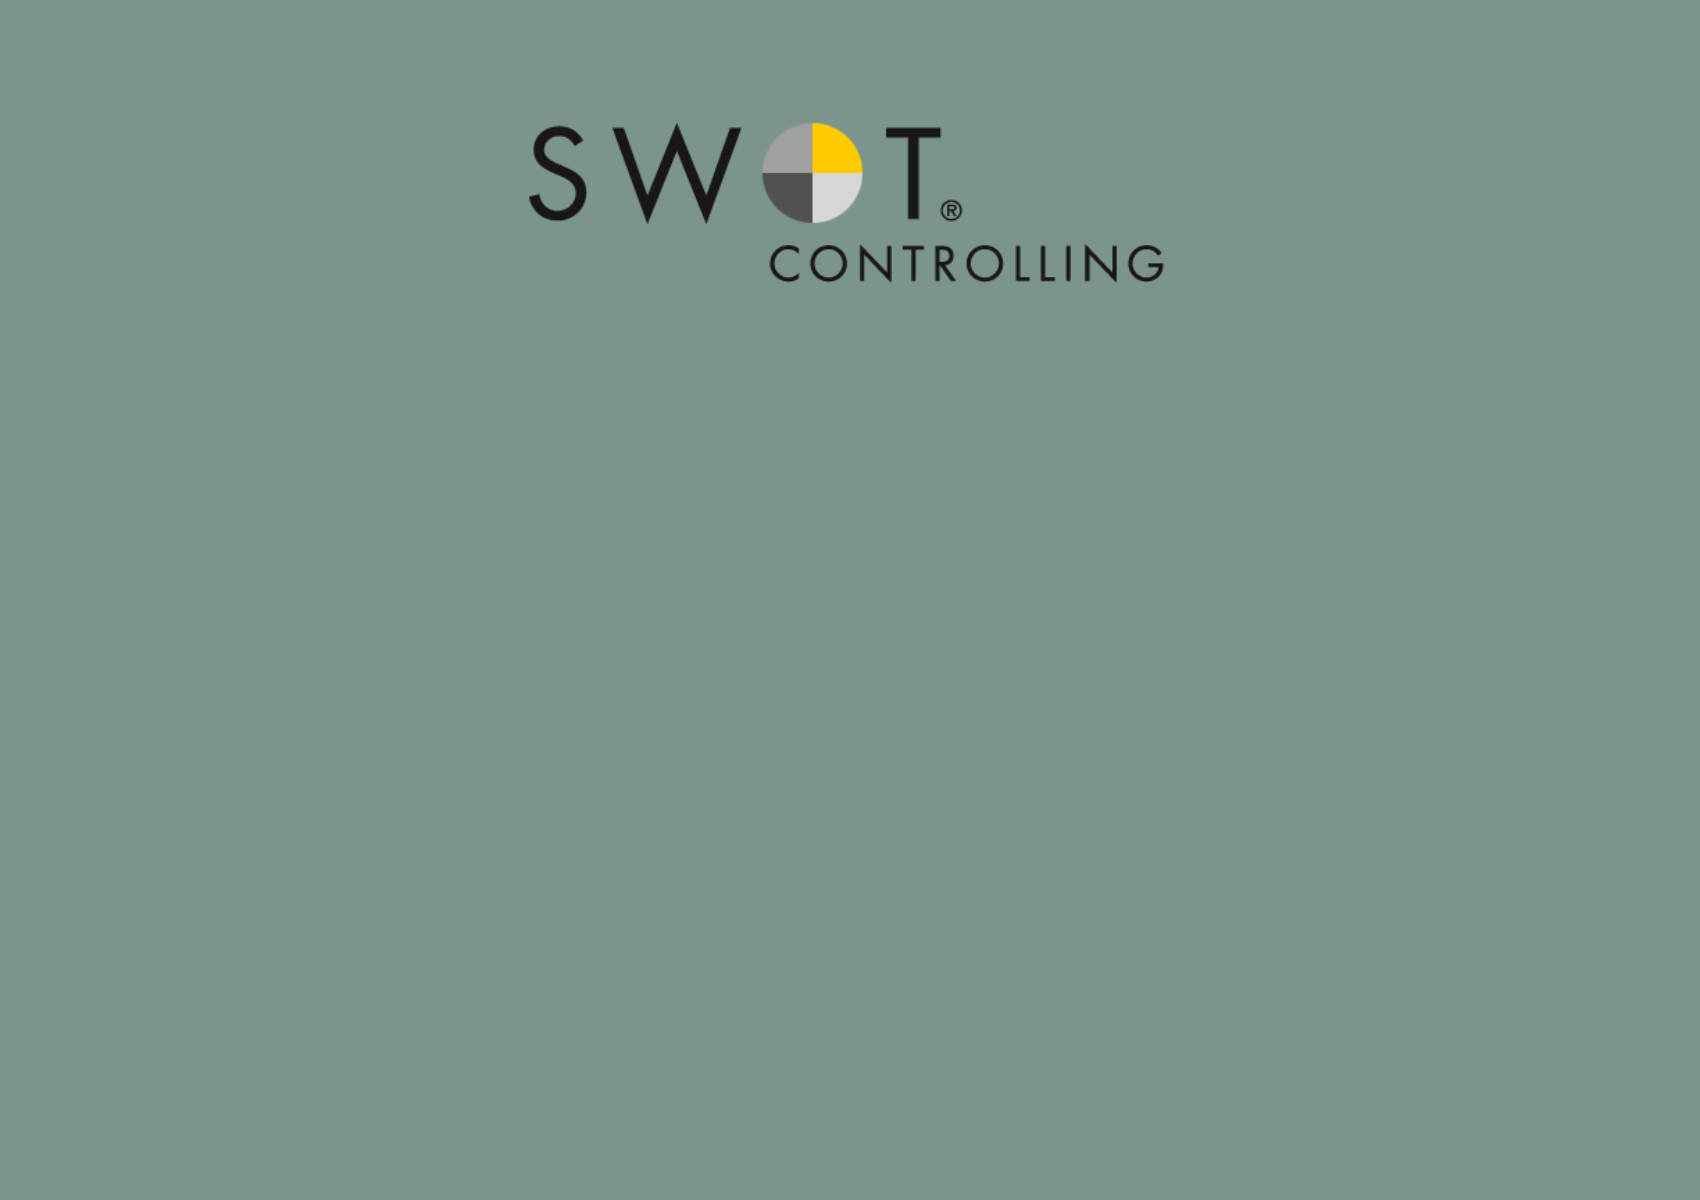 SWOT Controlling